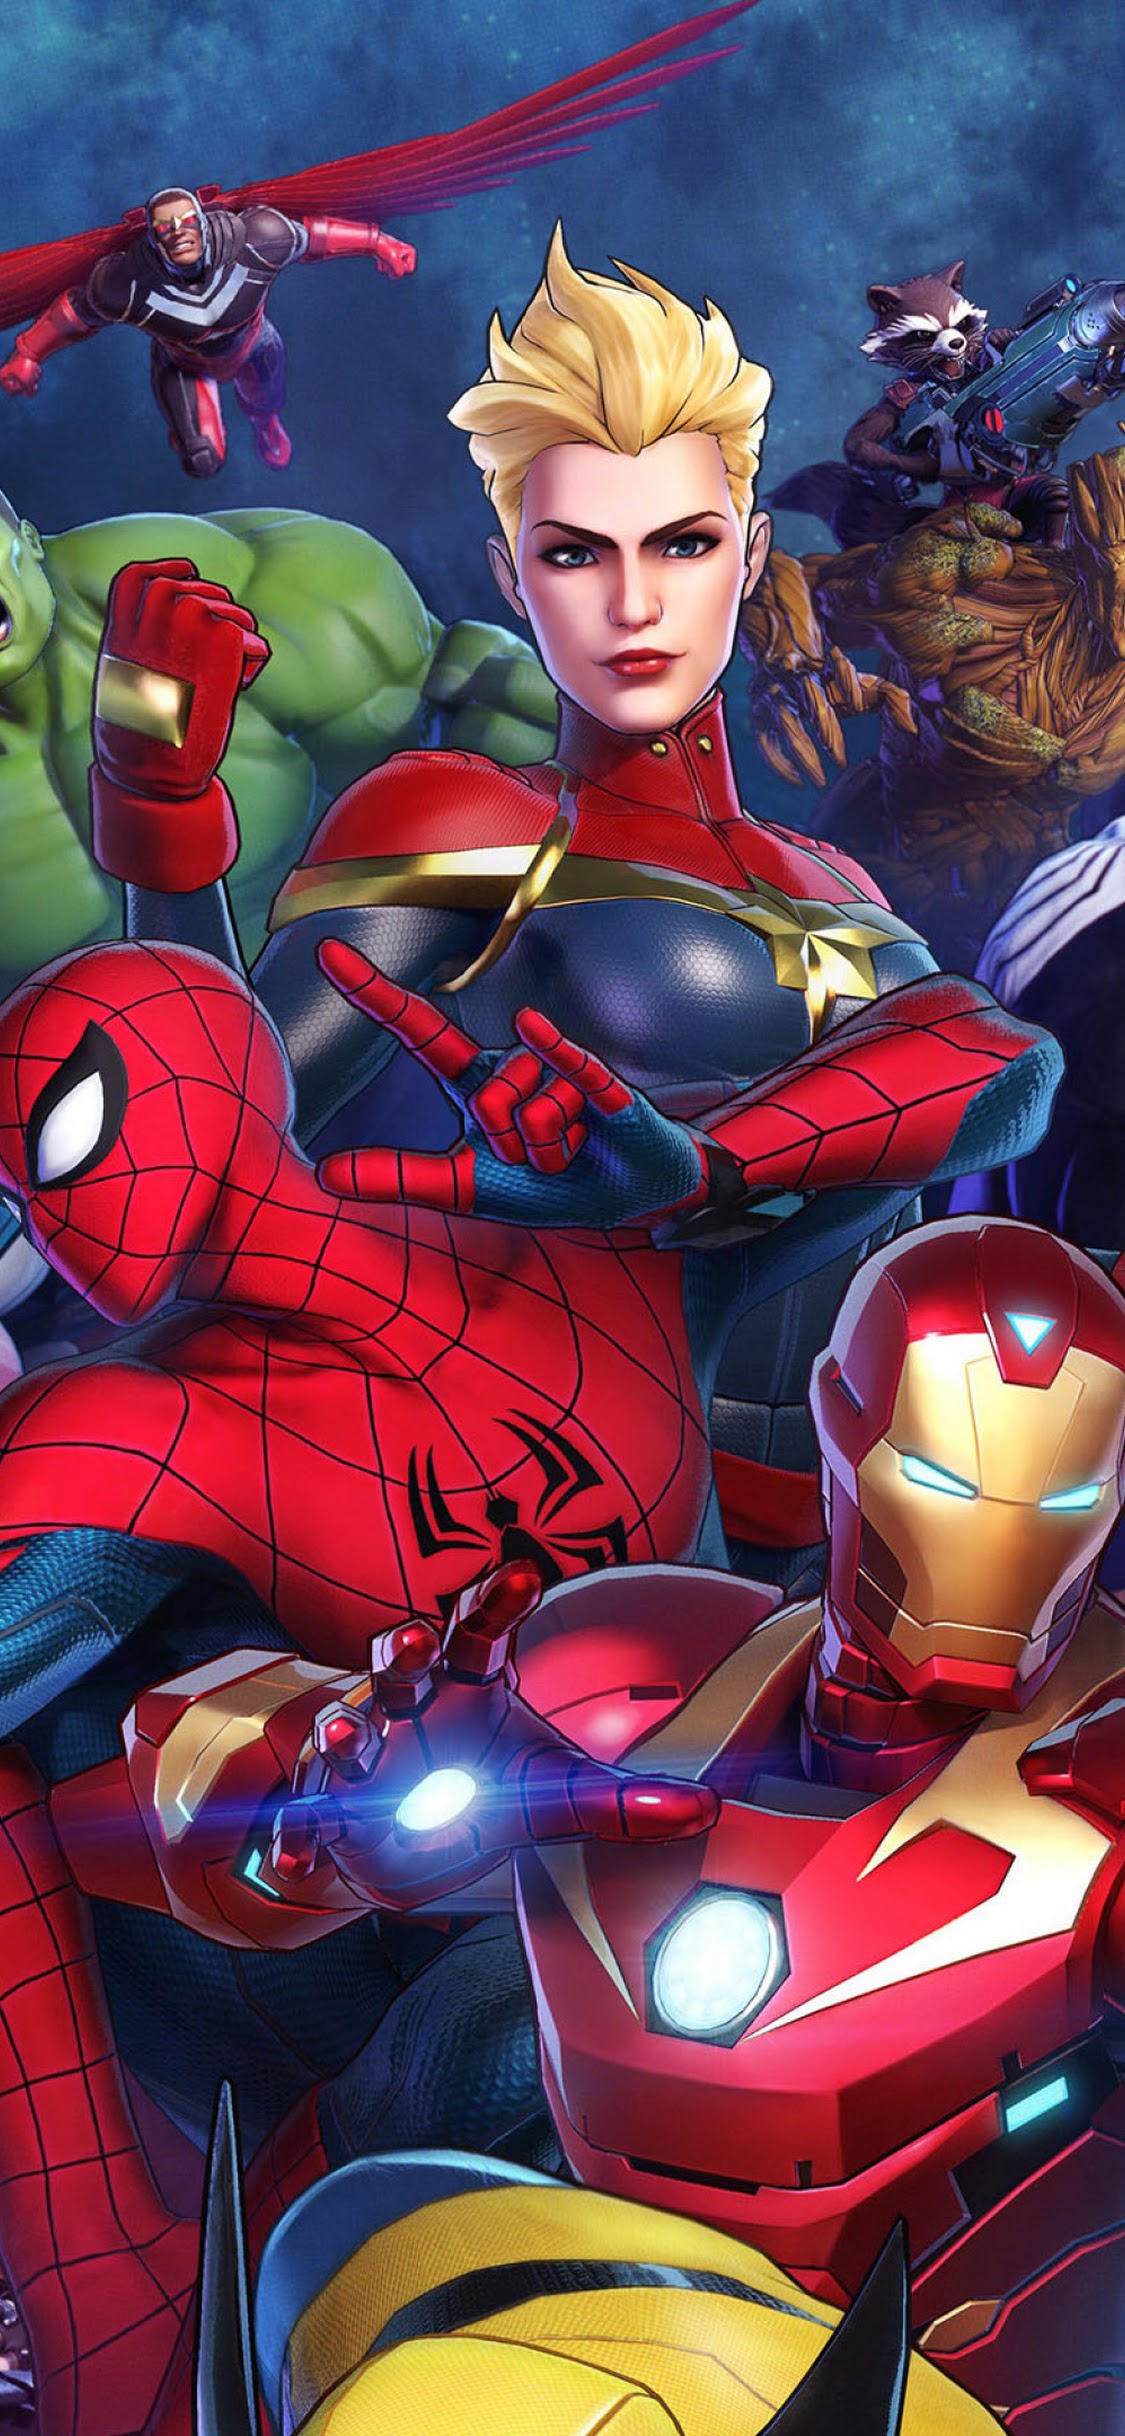 Marvel Ultimate Alliance 3 Characters 4k Wallpaper 46